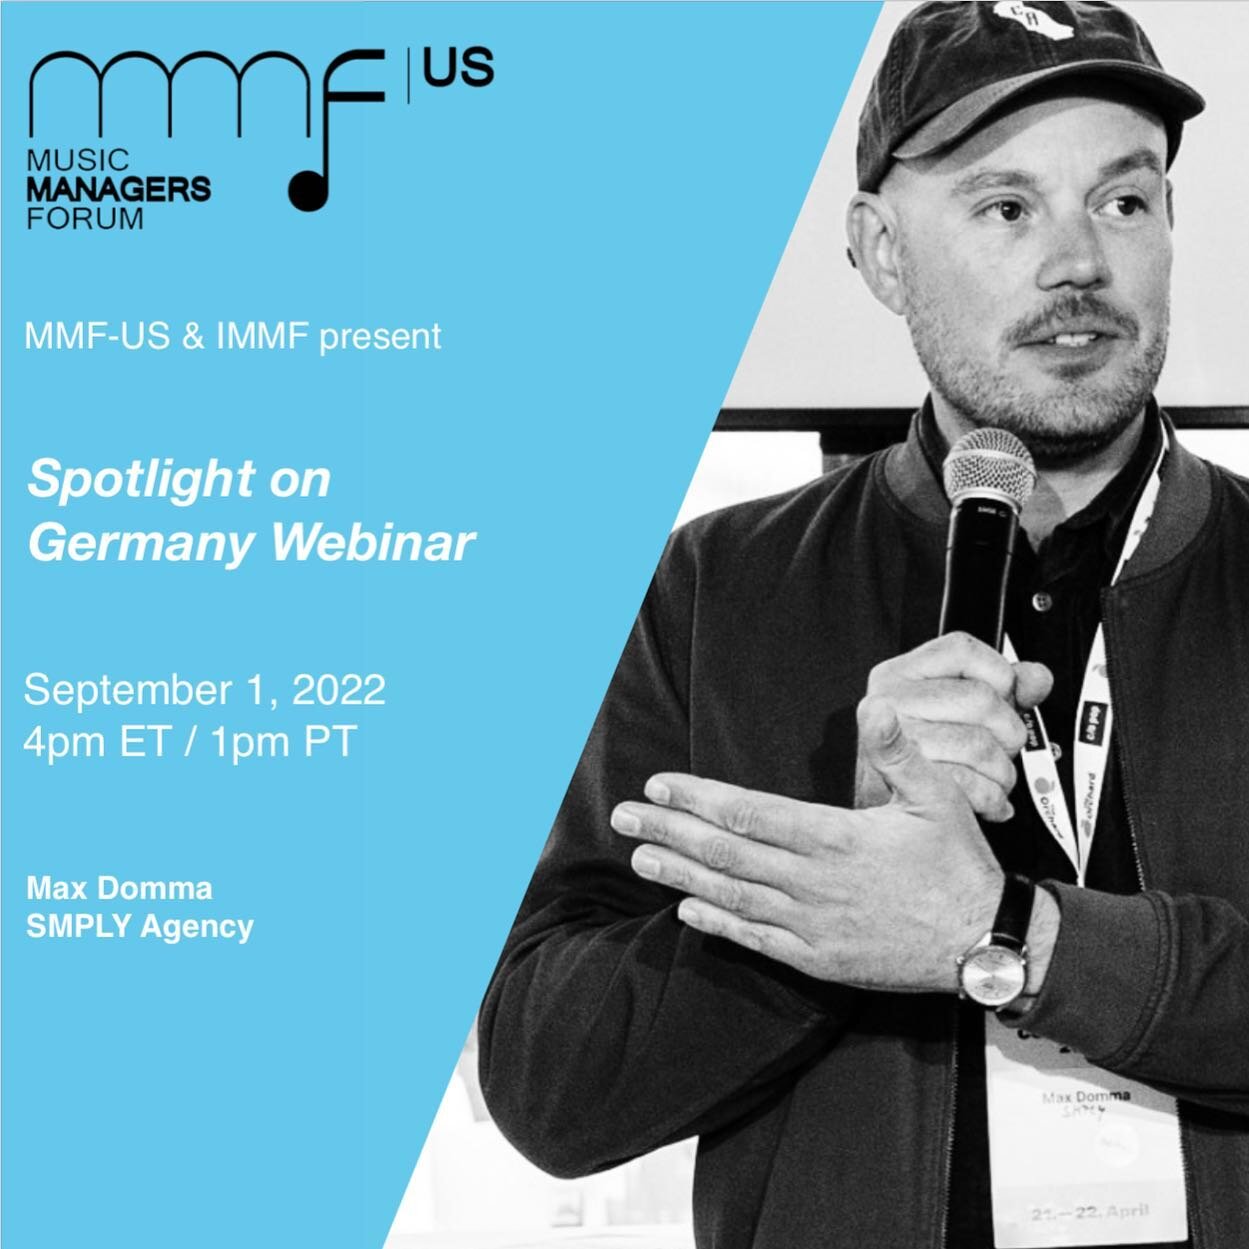 Come see Max Domma at MMF-US &amp; IMMF: Spotlight on Germany&nbsp;Webinar Thursday, September 1st at 4pm EST. Join us for a spotlight on the music giant: Germany
RSVP: https://us06web.zoom.us/webinar/register/WN_hKpfNJyrSLyA98iugK1jaw